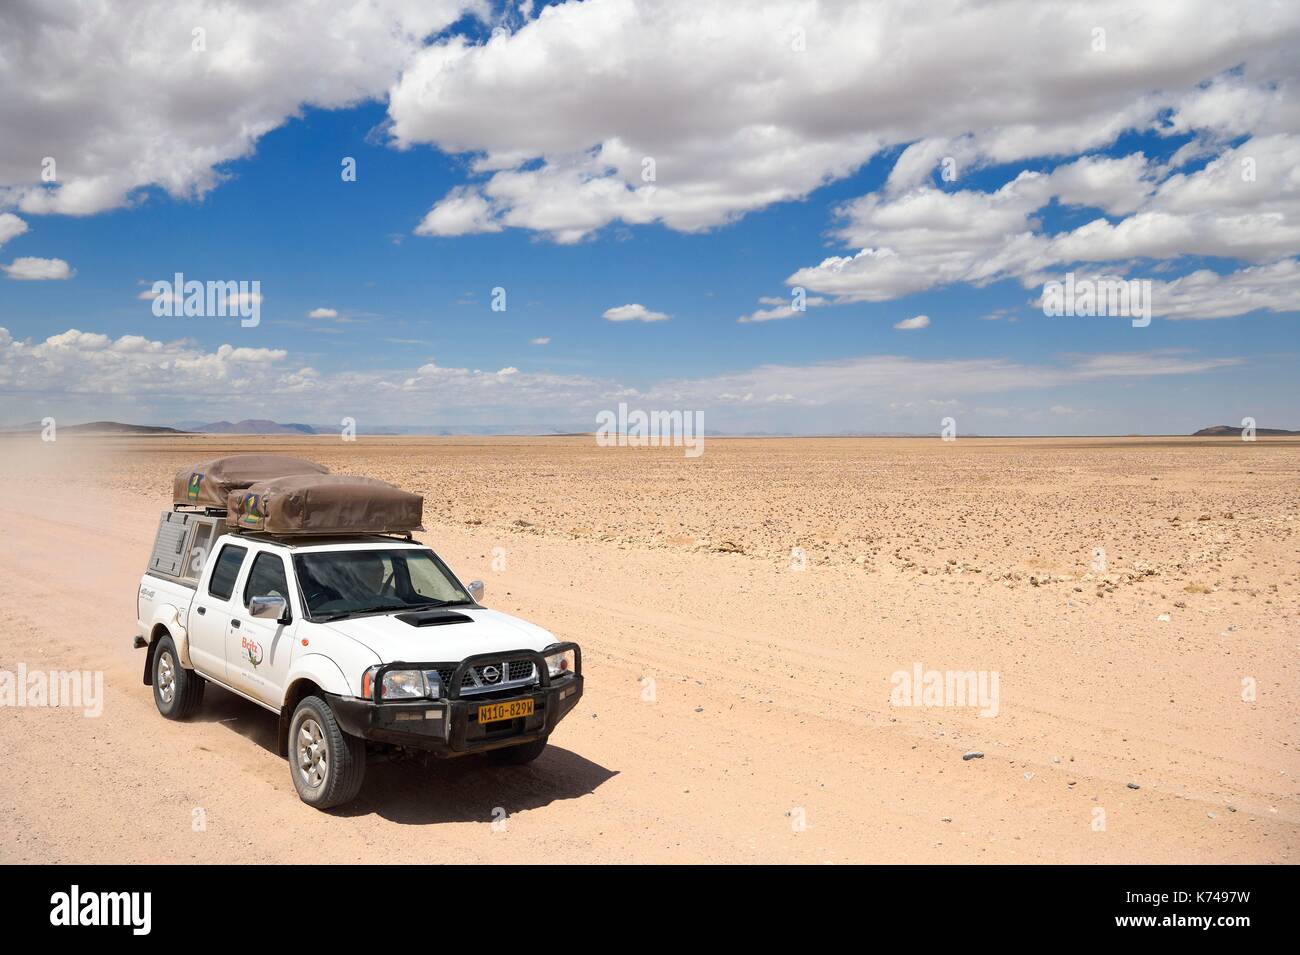 Namibia, Erongo region, Namib Naukluft National Park, Namib Desert, four-wheel drive vehicle on the C14 gravel road Stock Photo